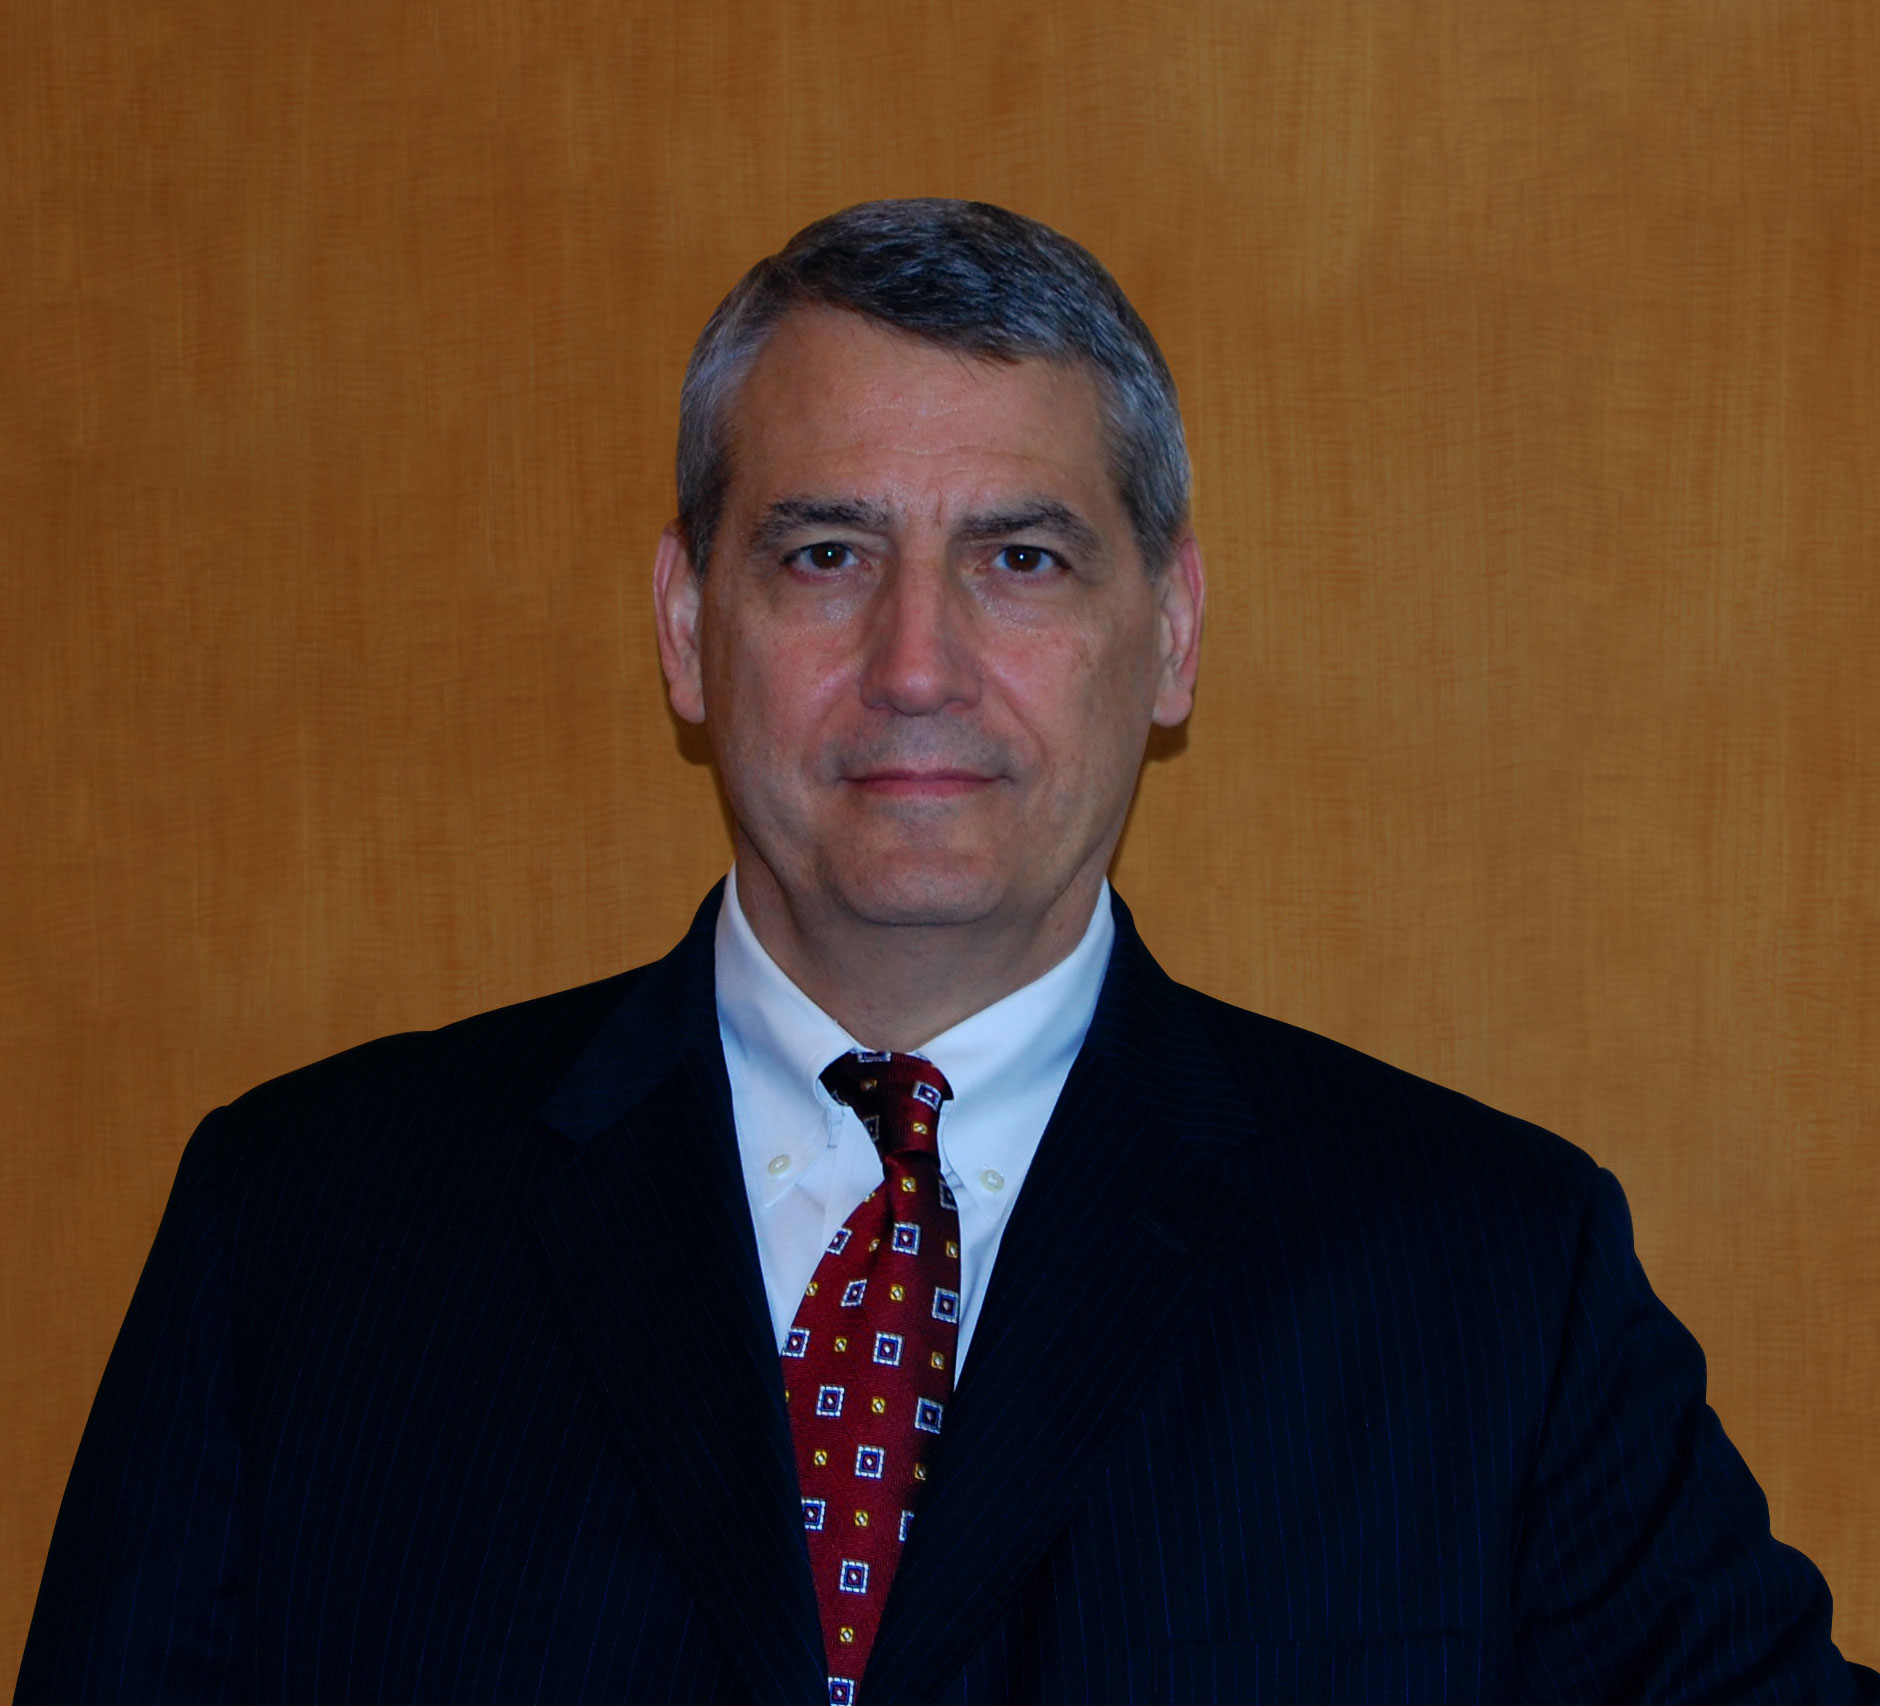 Dr. James Kramer, Vice President of Operations, ATCC